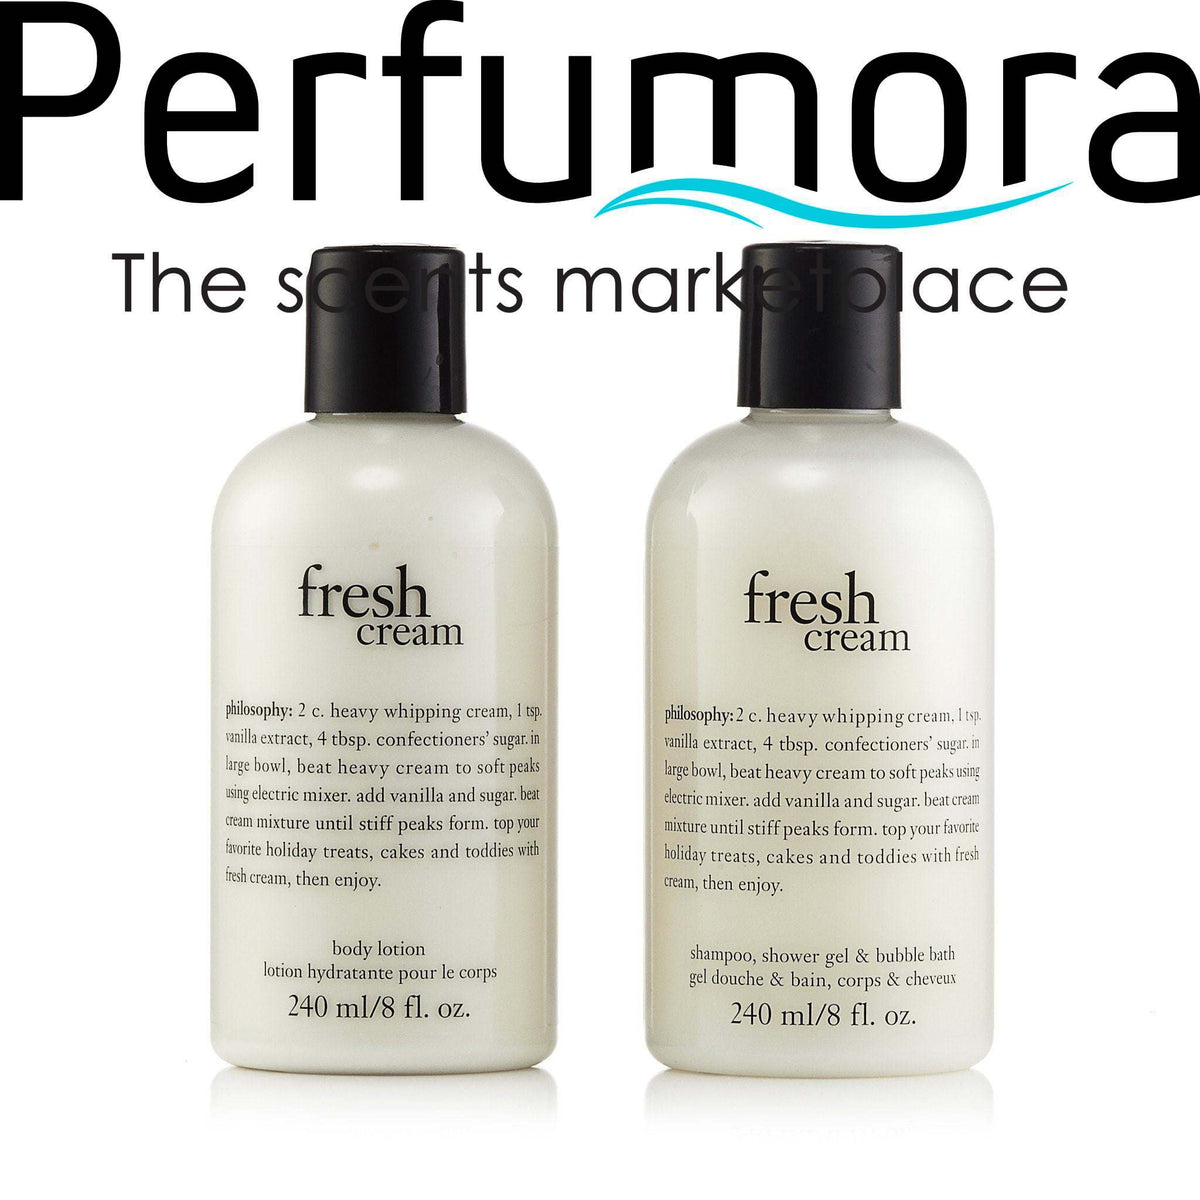 Fresh Cream Shower Gel and Shampoo Gift Set by Philosophy 8.0 oz. Each